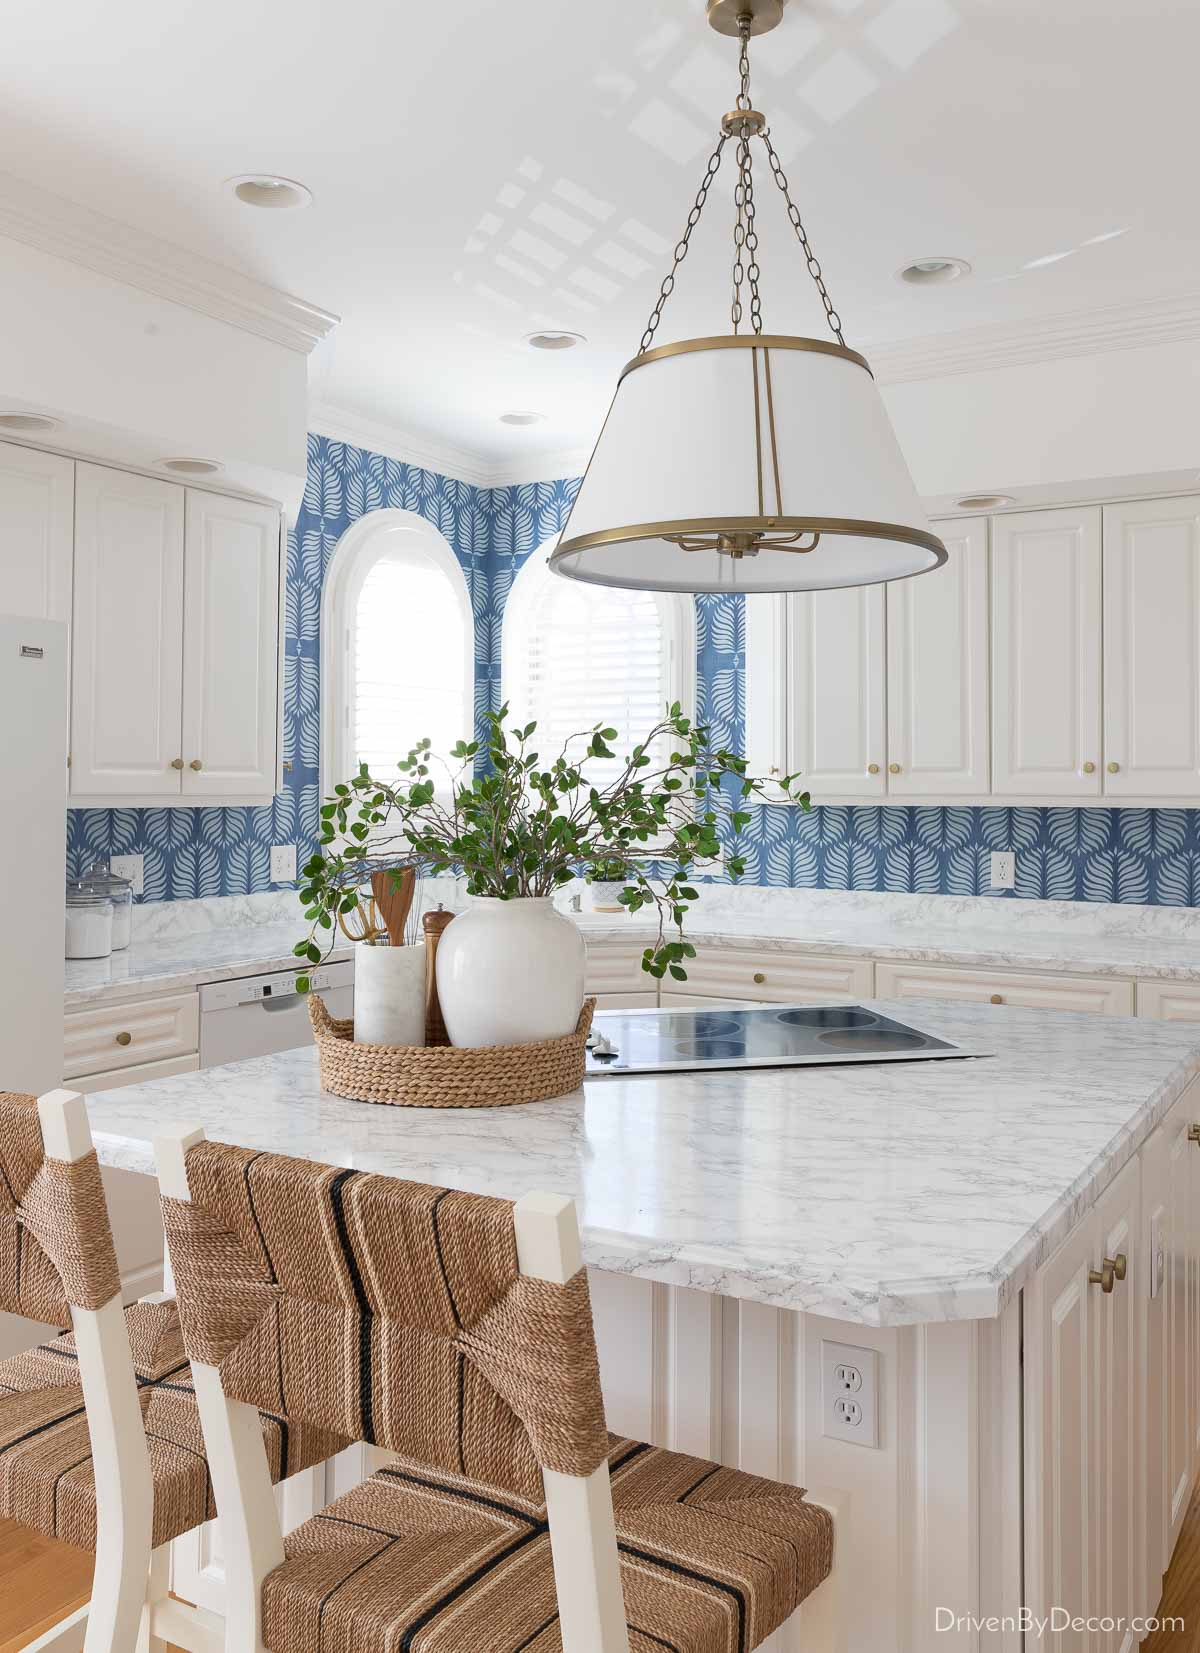 Blue wallpaper on a kitchen backsplash - one of my favorite wallpaper ideas!